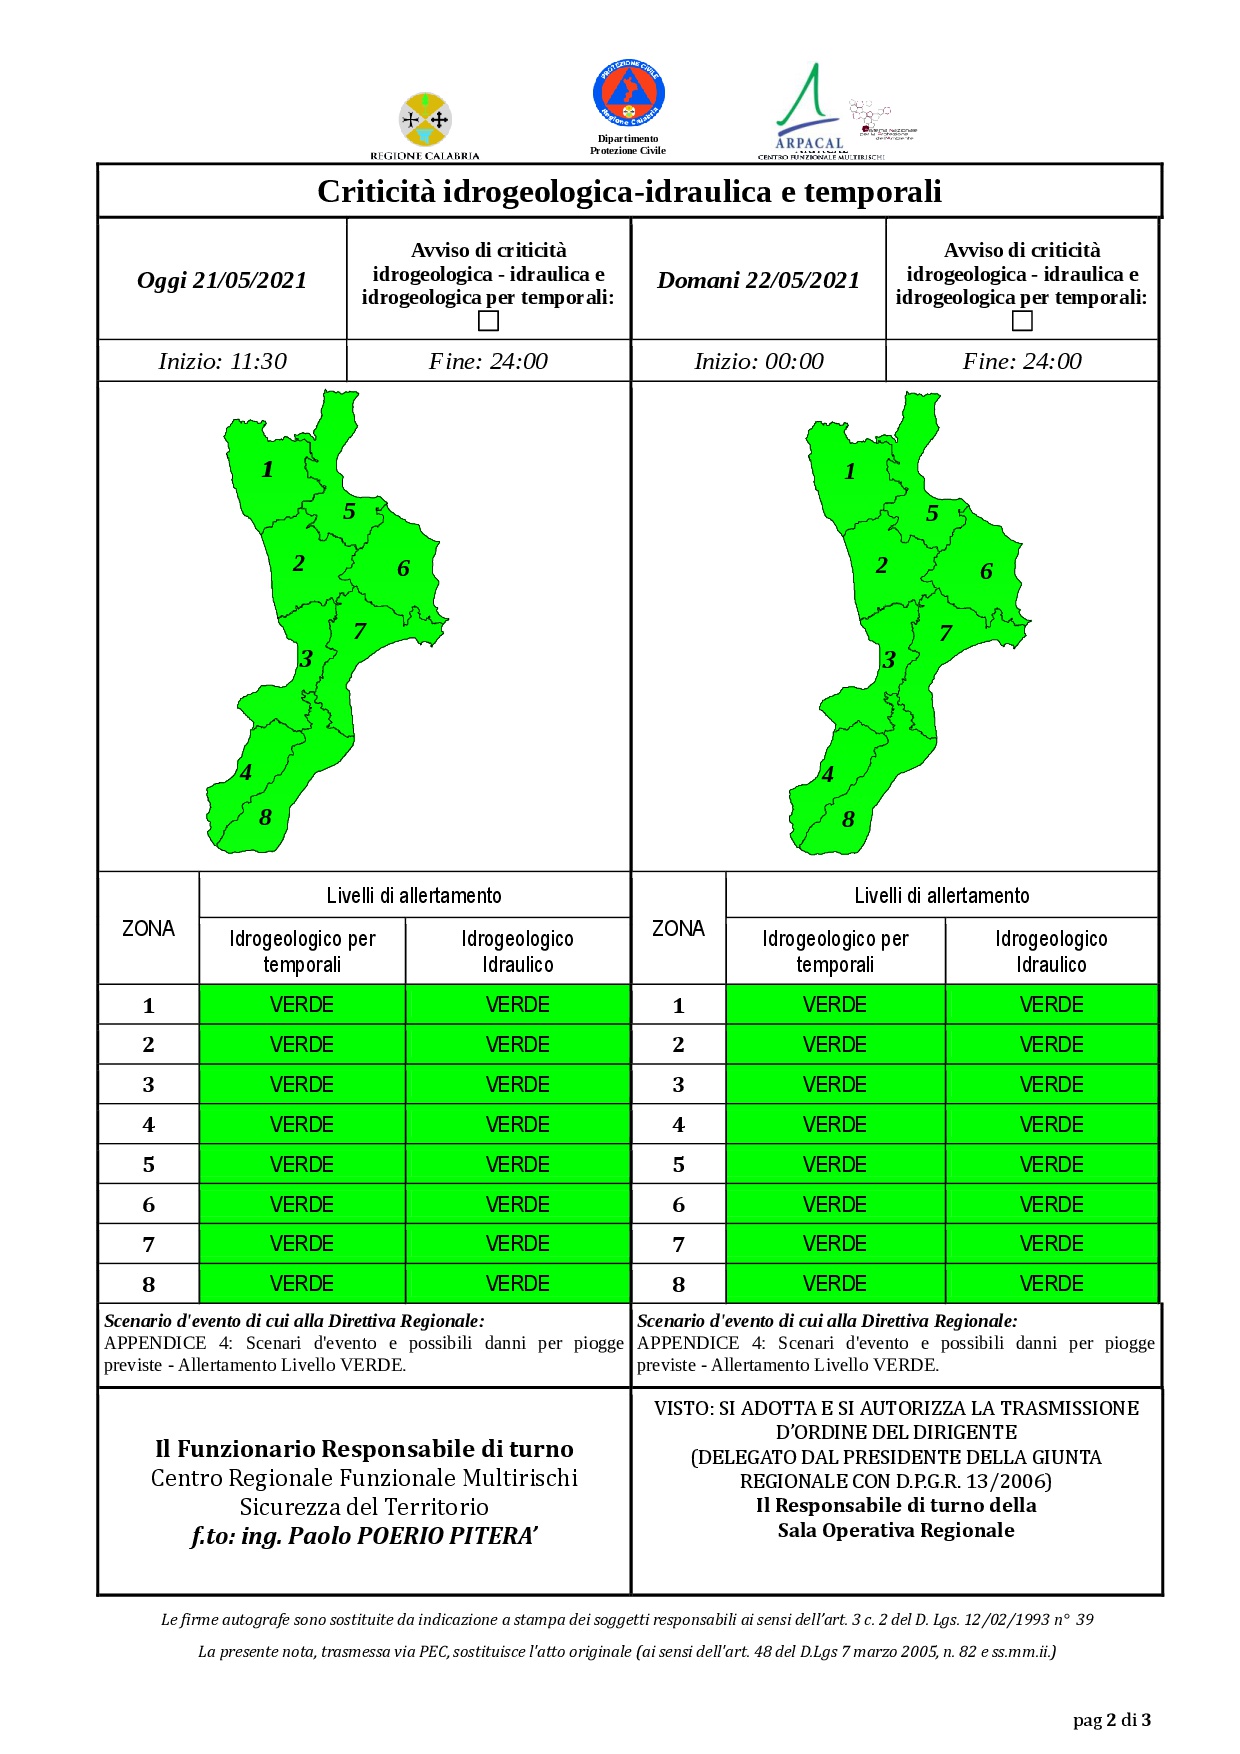 Criticità idrogeologica-idraulica e temporali in Calabria 21-05-2021